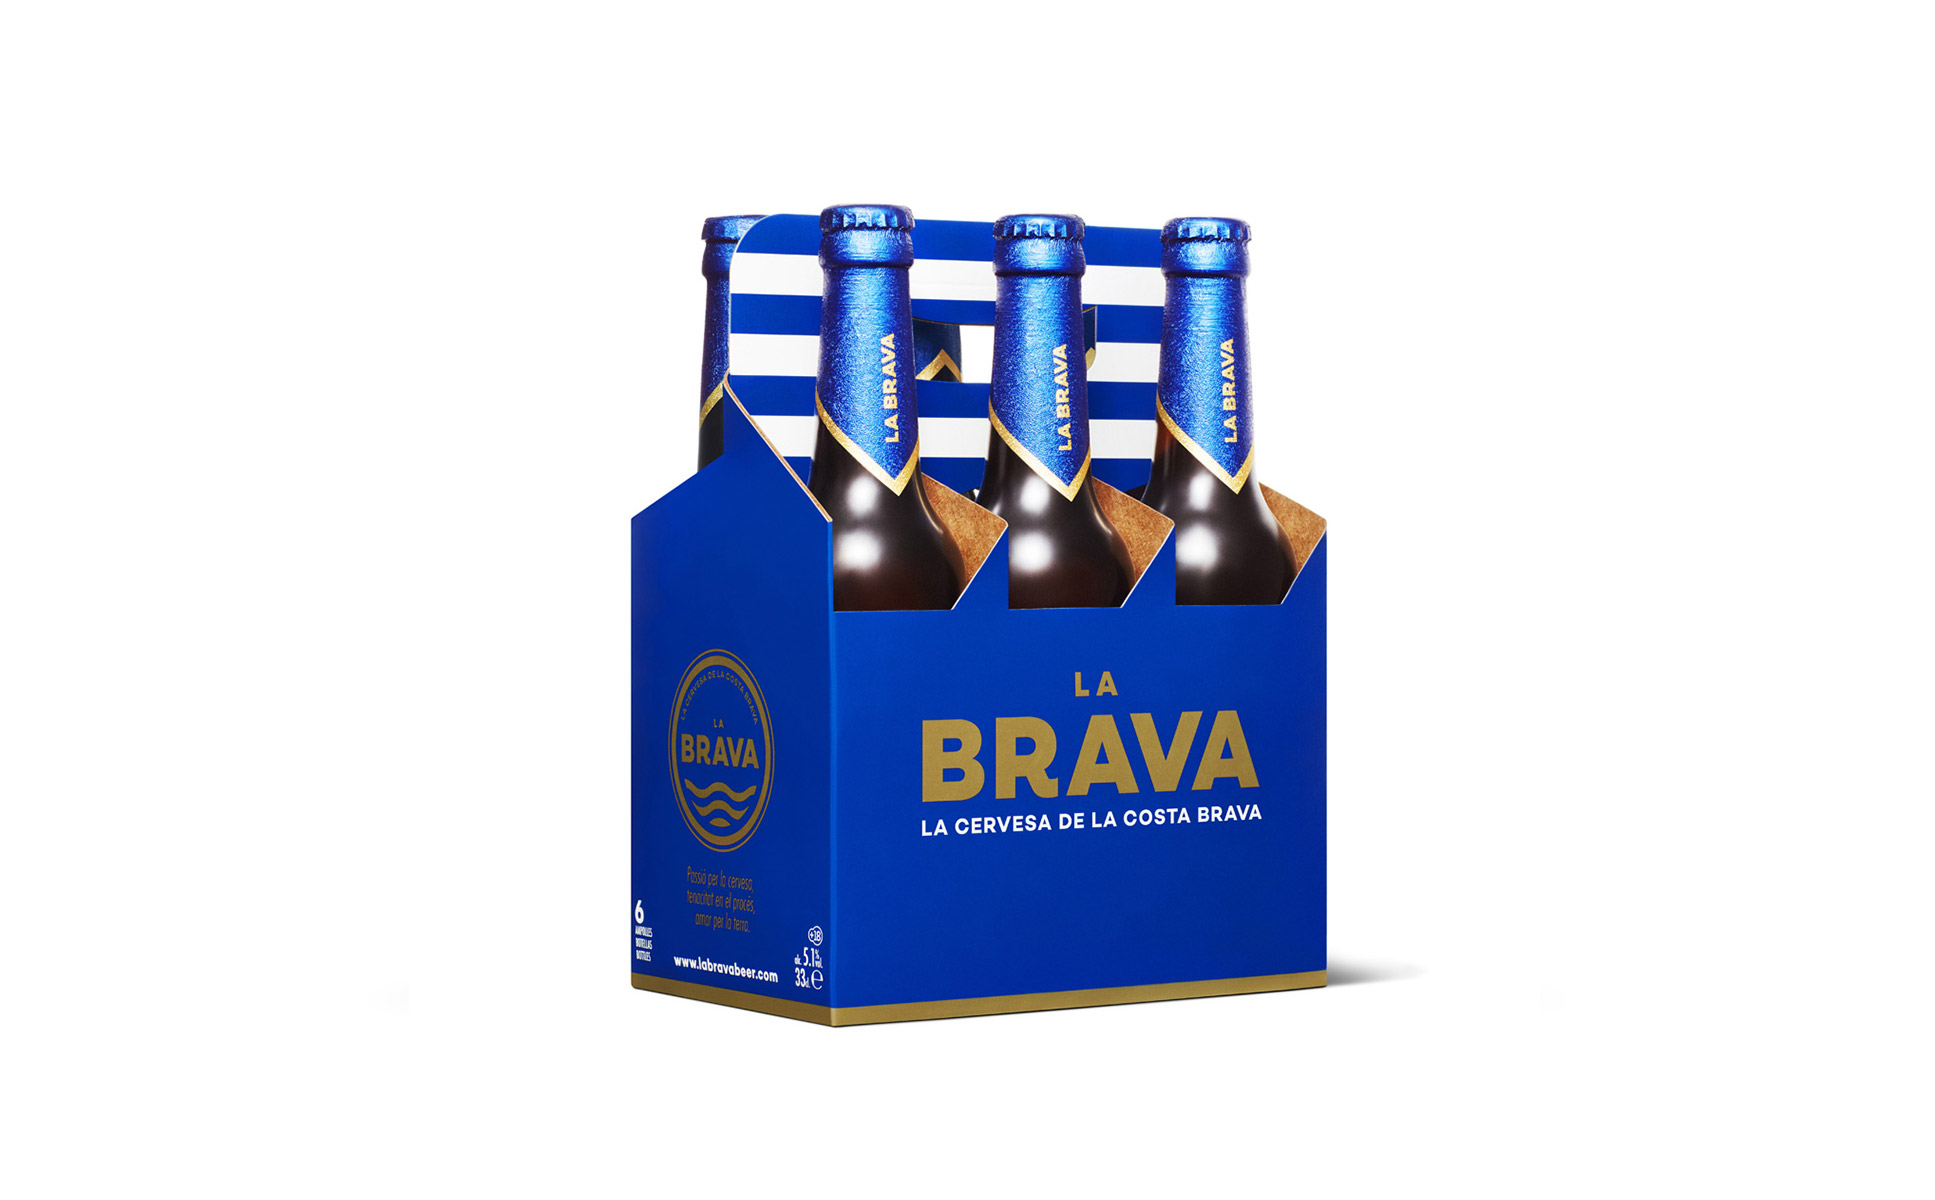 La Brava box packaging